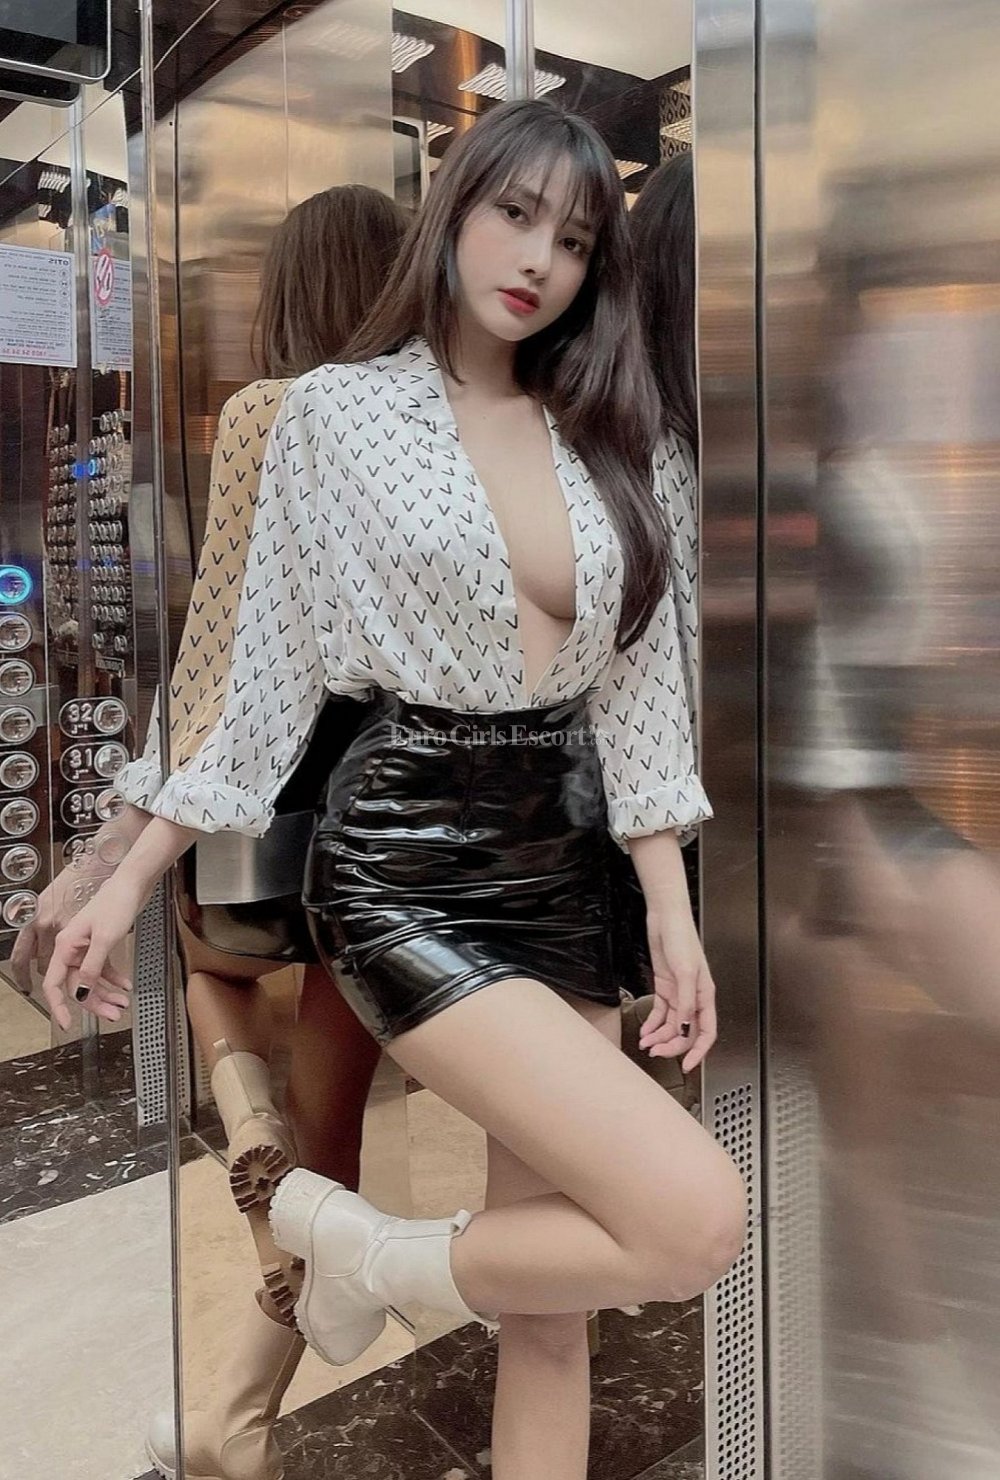 Fascinating Busty escort in Dubai - model photo Wendy